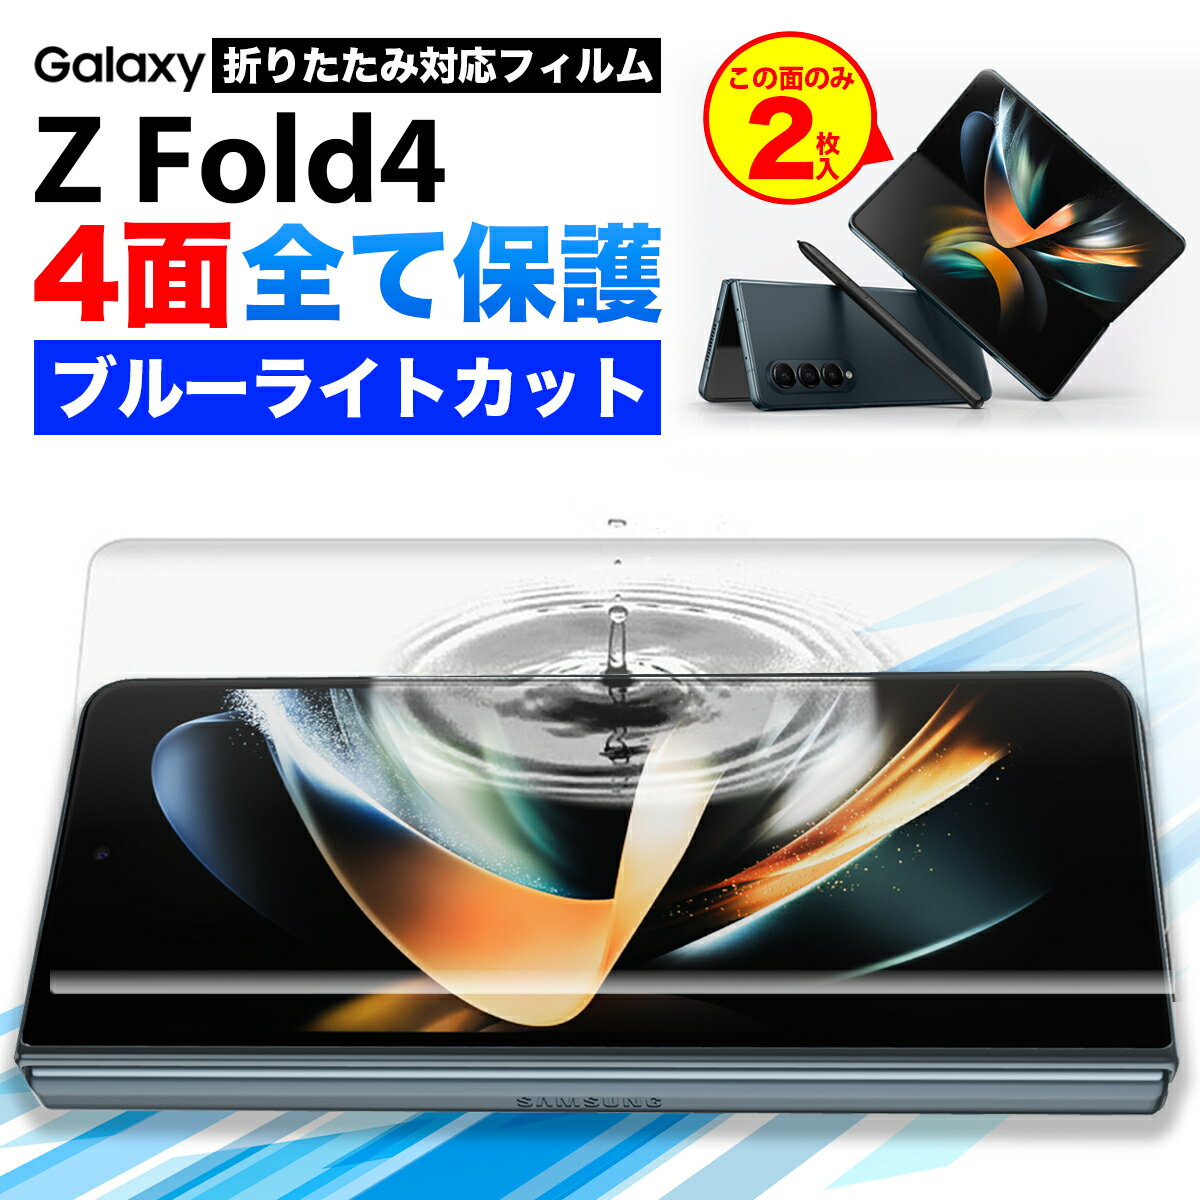 Galaxy Z Fold4 フィルム ブルーライトカット galaxy z fold4 ハイドロゲル フィルム ギャラクシー ゼット フォールド4 スマホ 全面 保護 指紋認証 対応 ケースに干渉しない 割れない TPU ウレ…